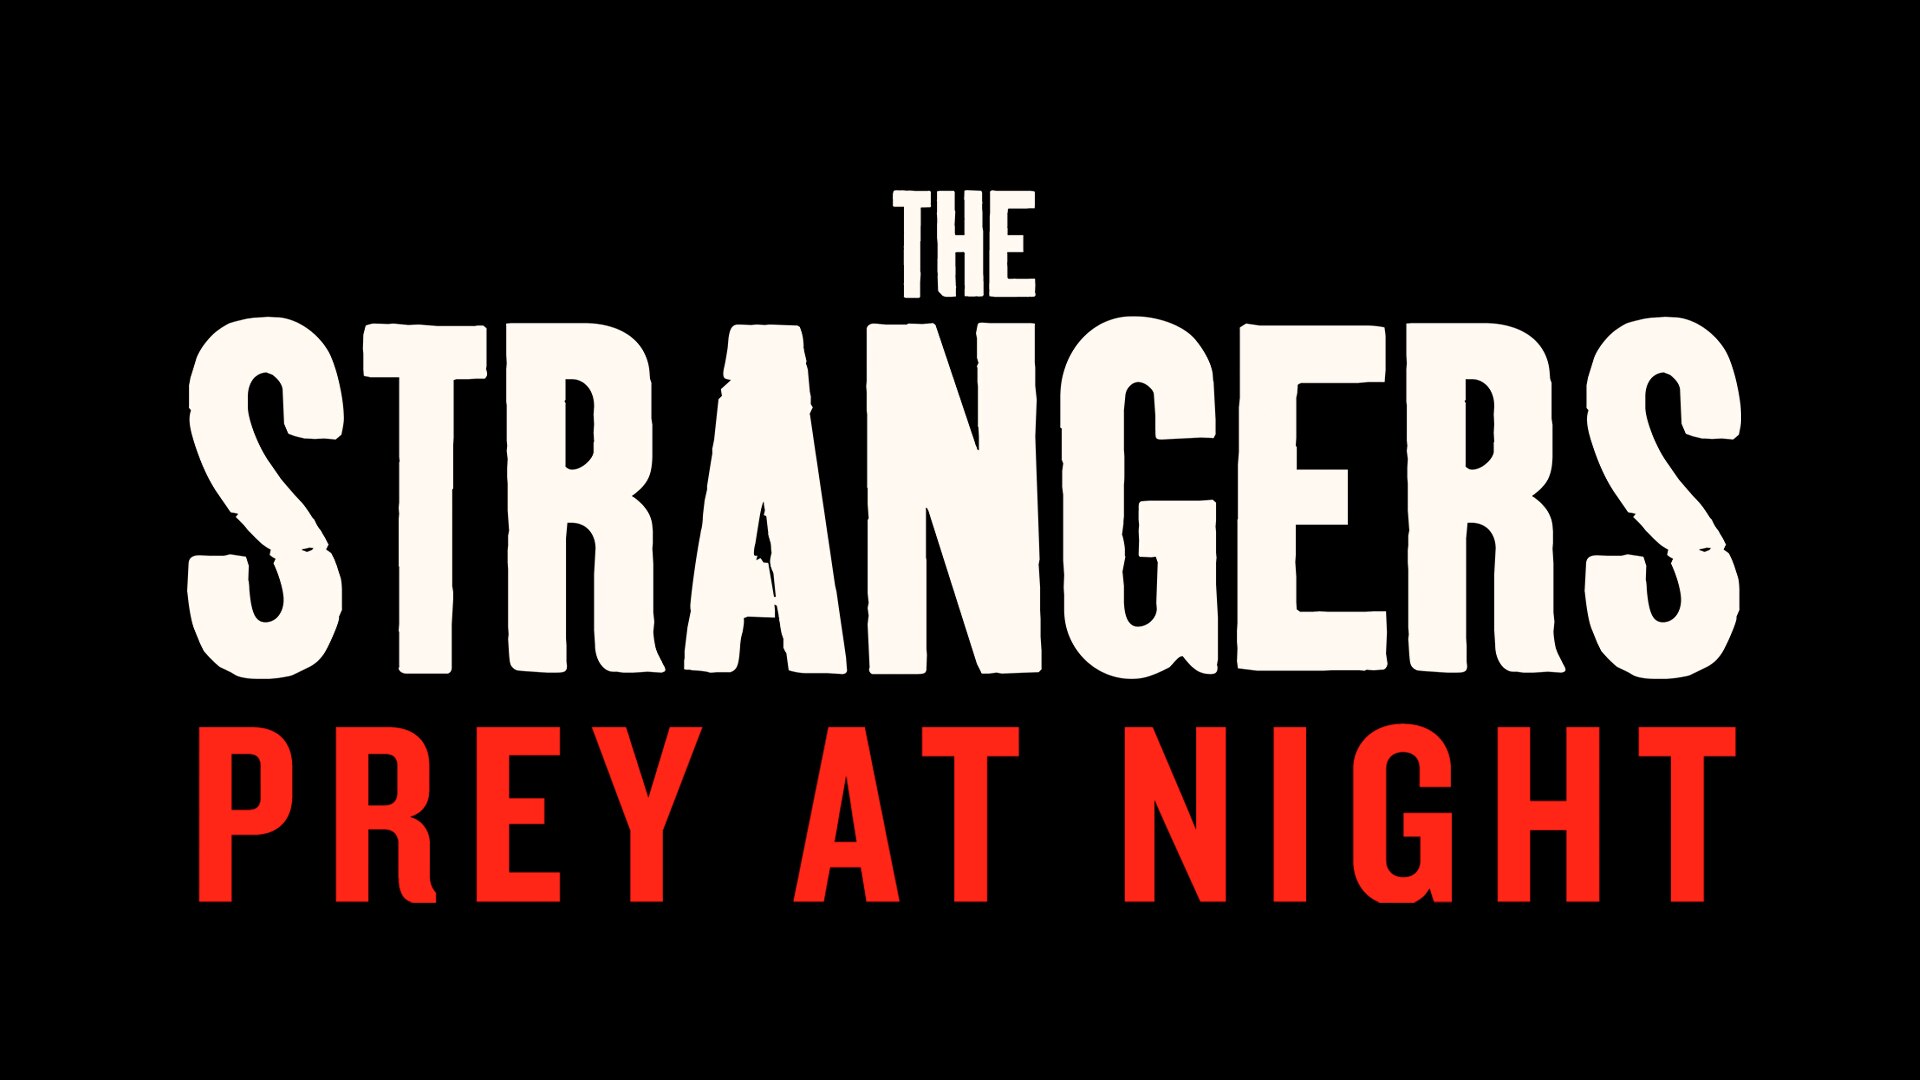 the strangers prey at night